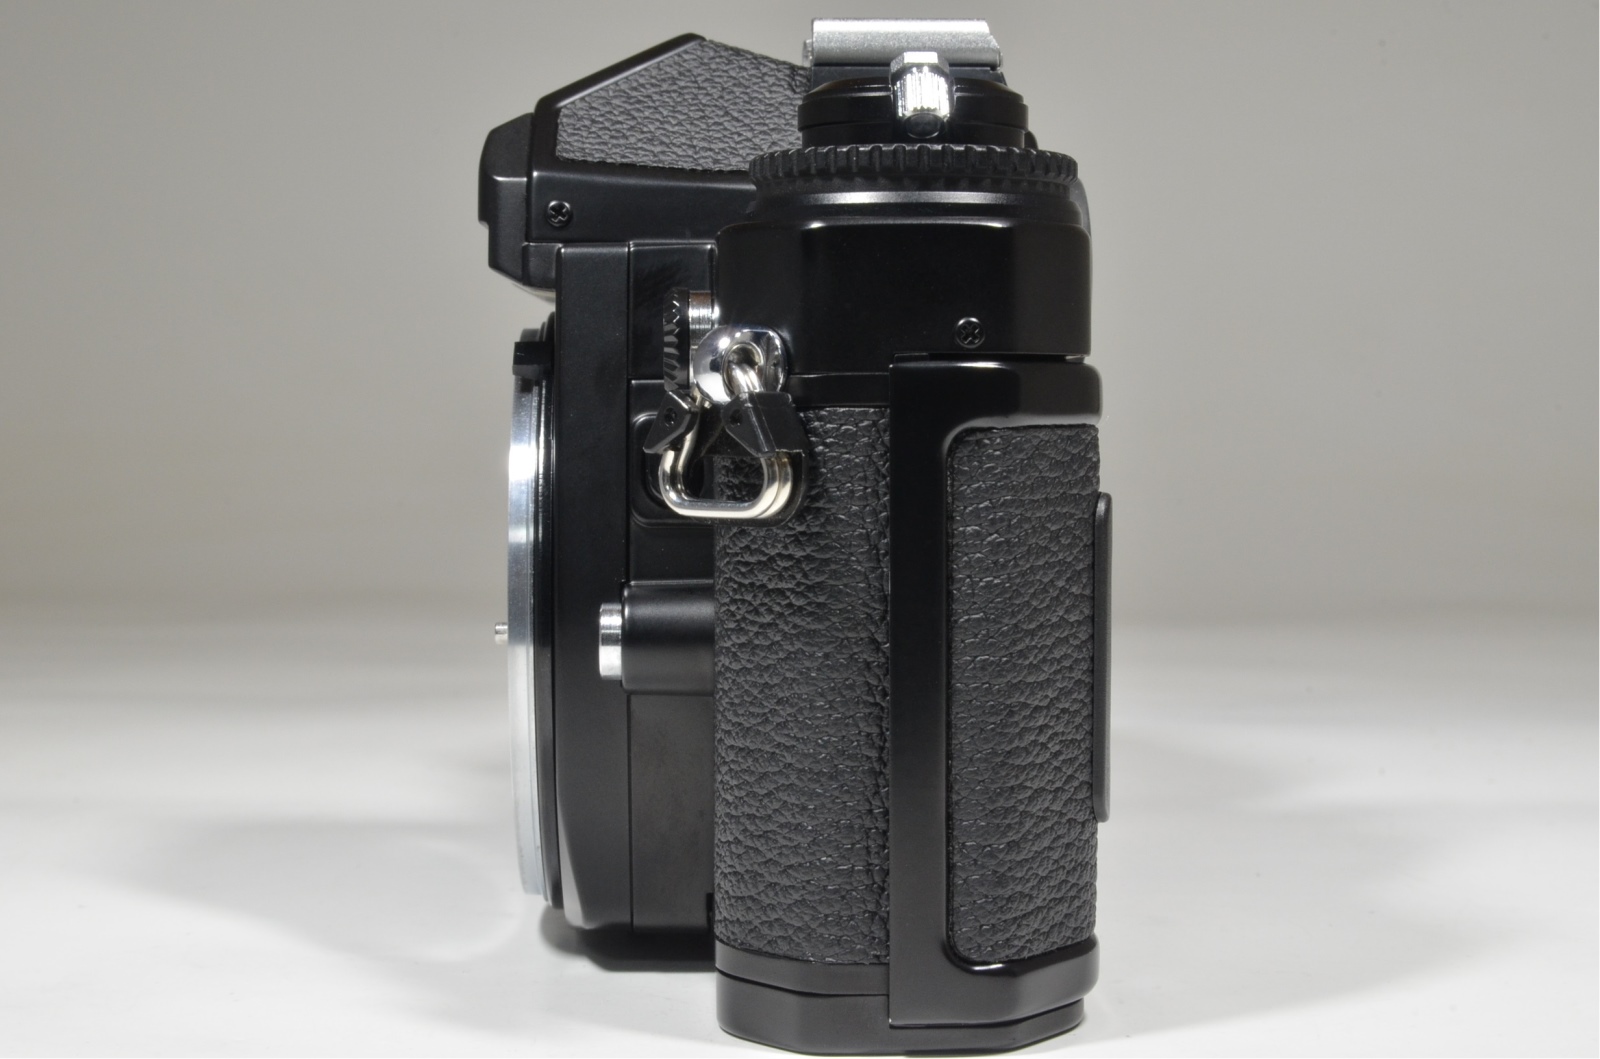 nikon fm3a 35mm film camera black